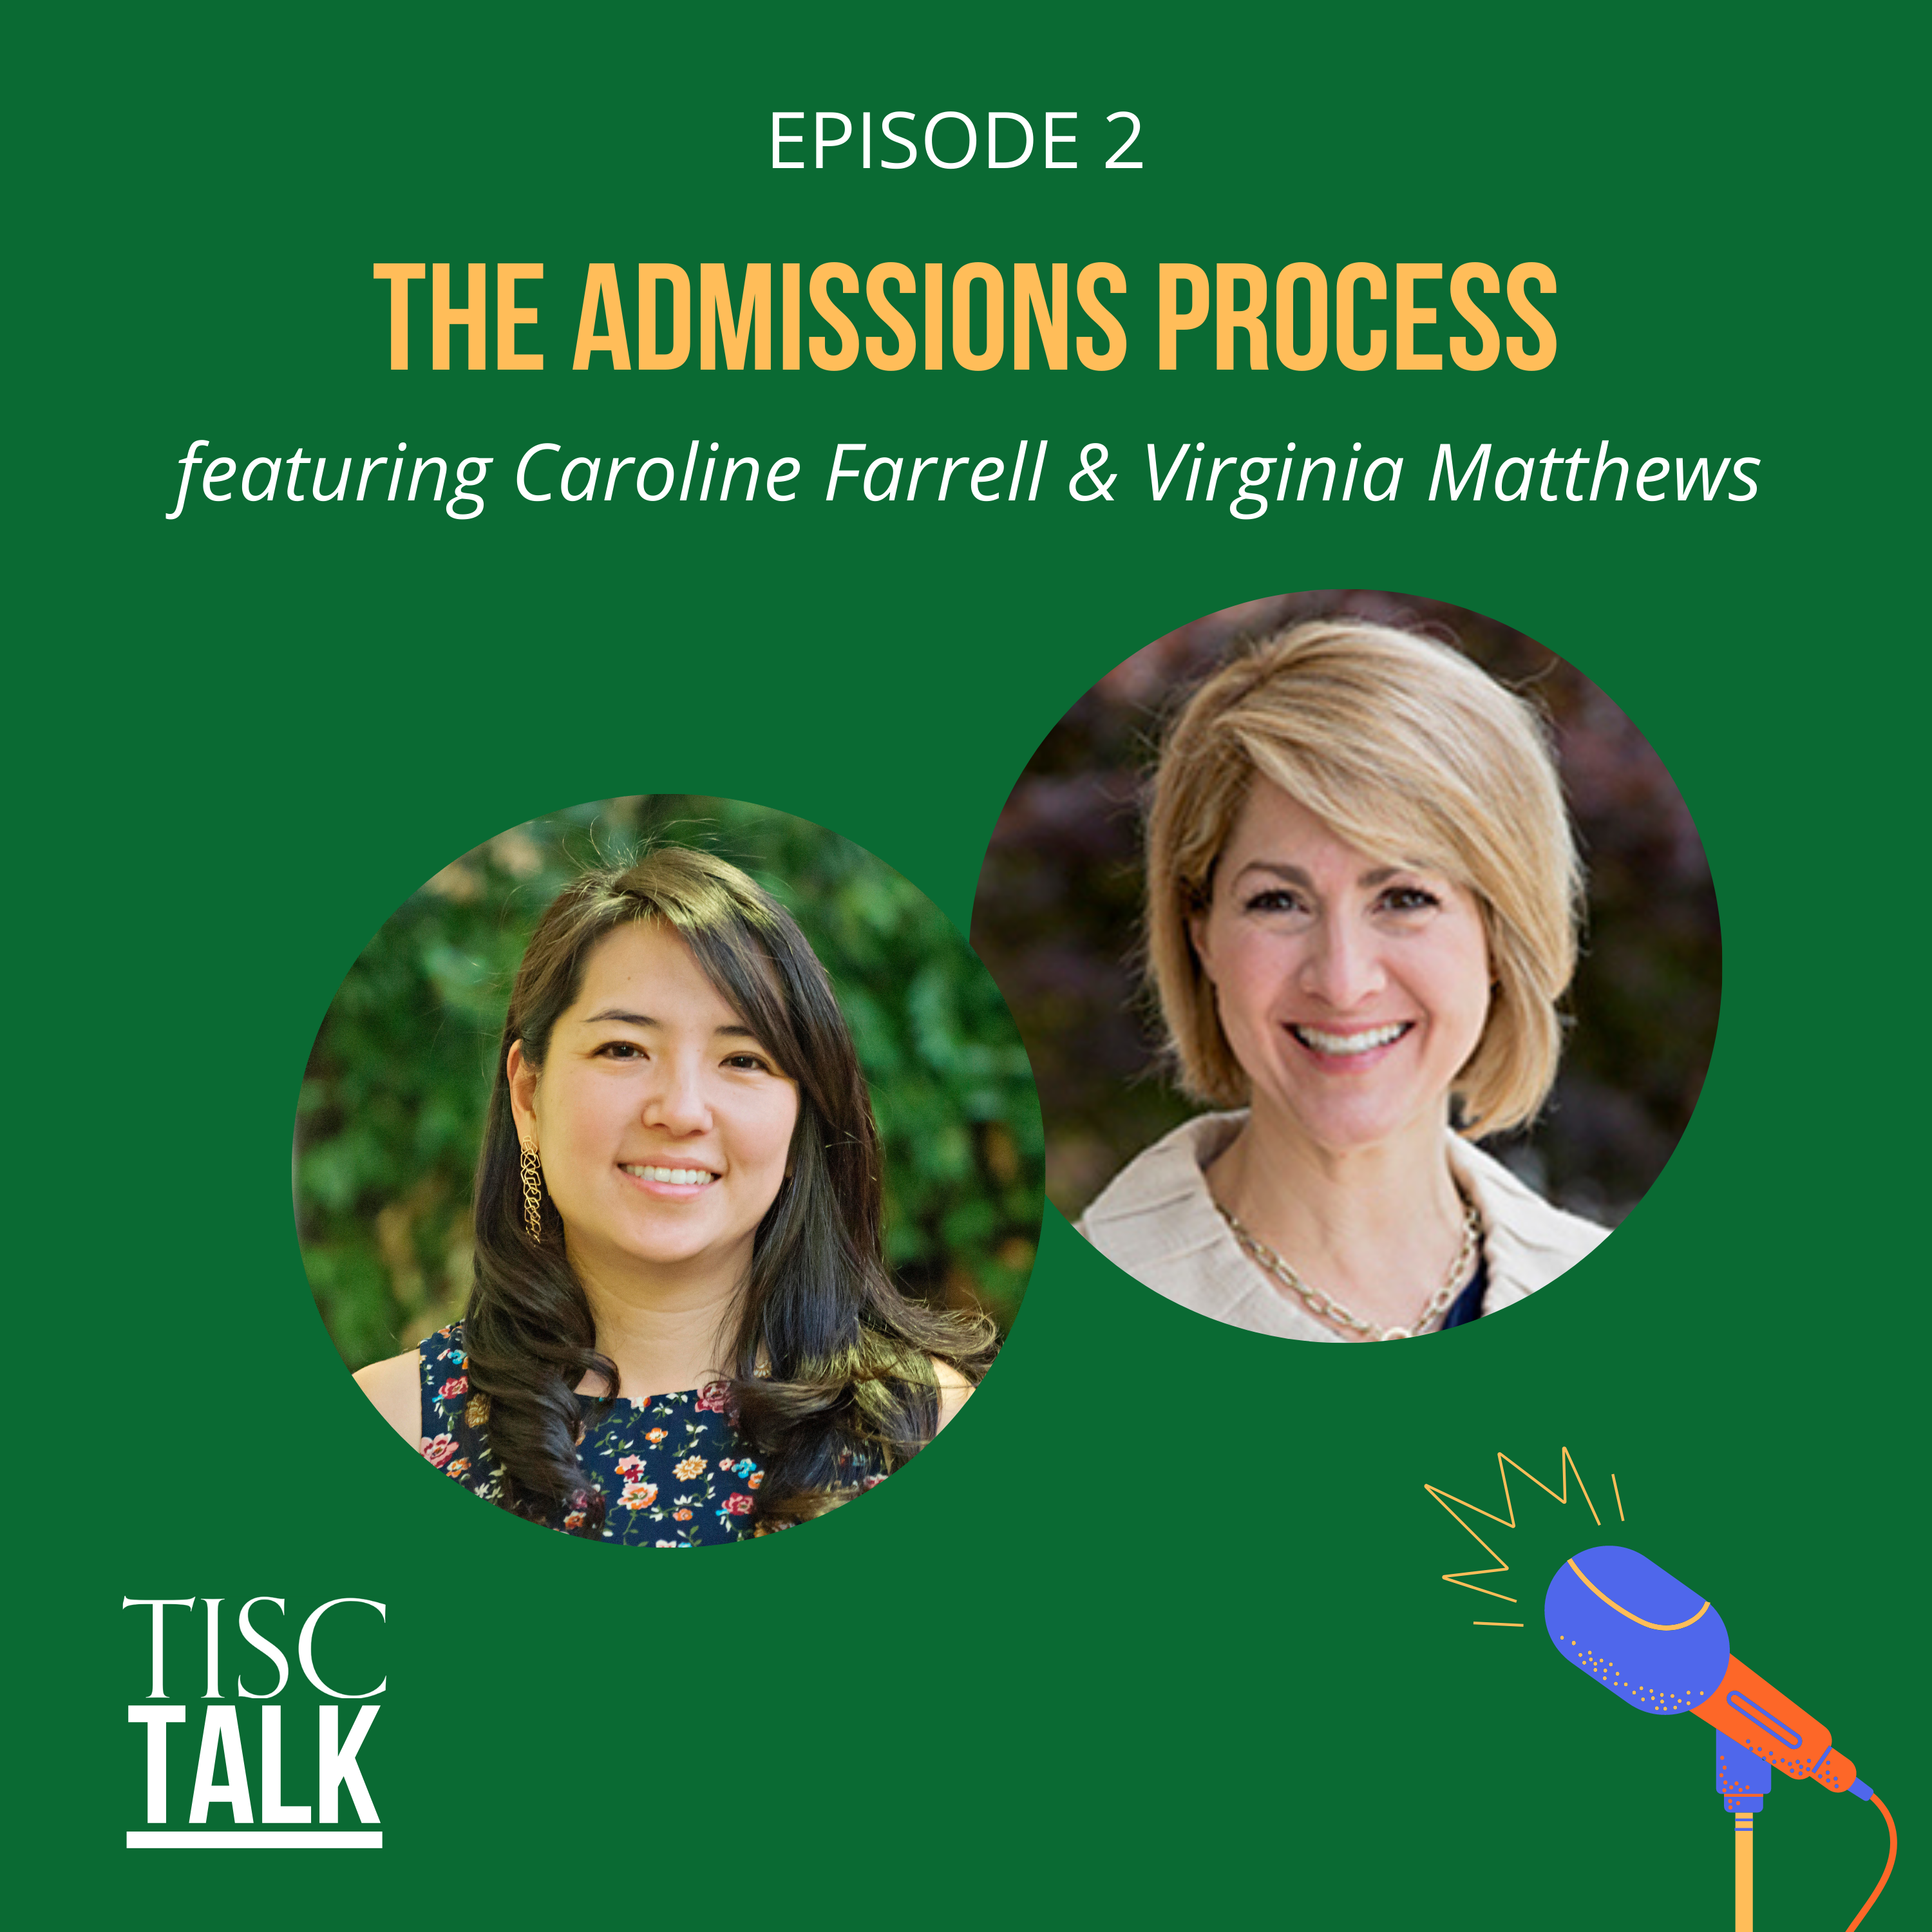 TISC Talk Episode 2: Admissions Process